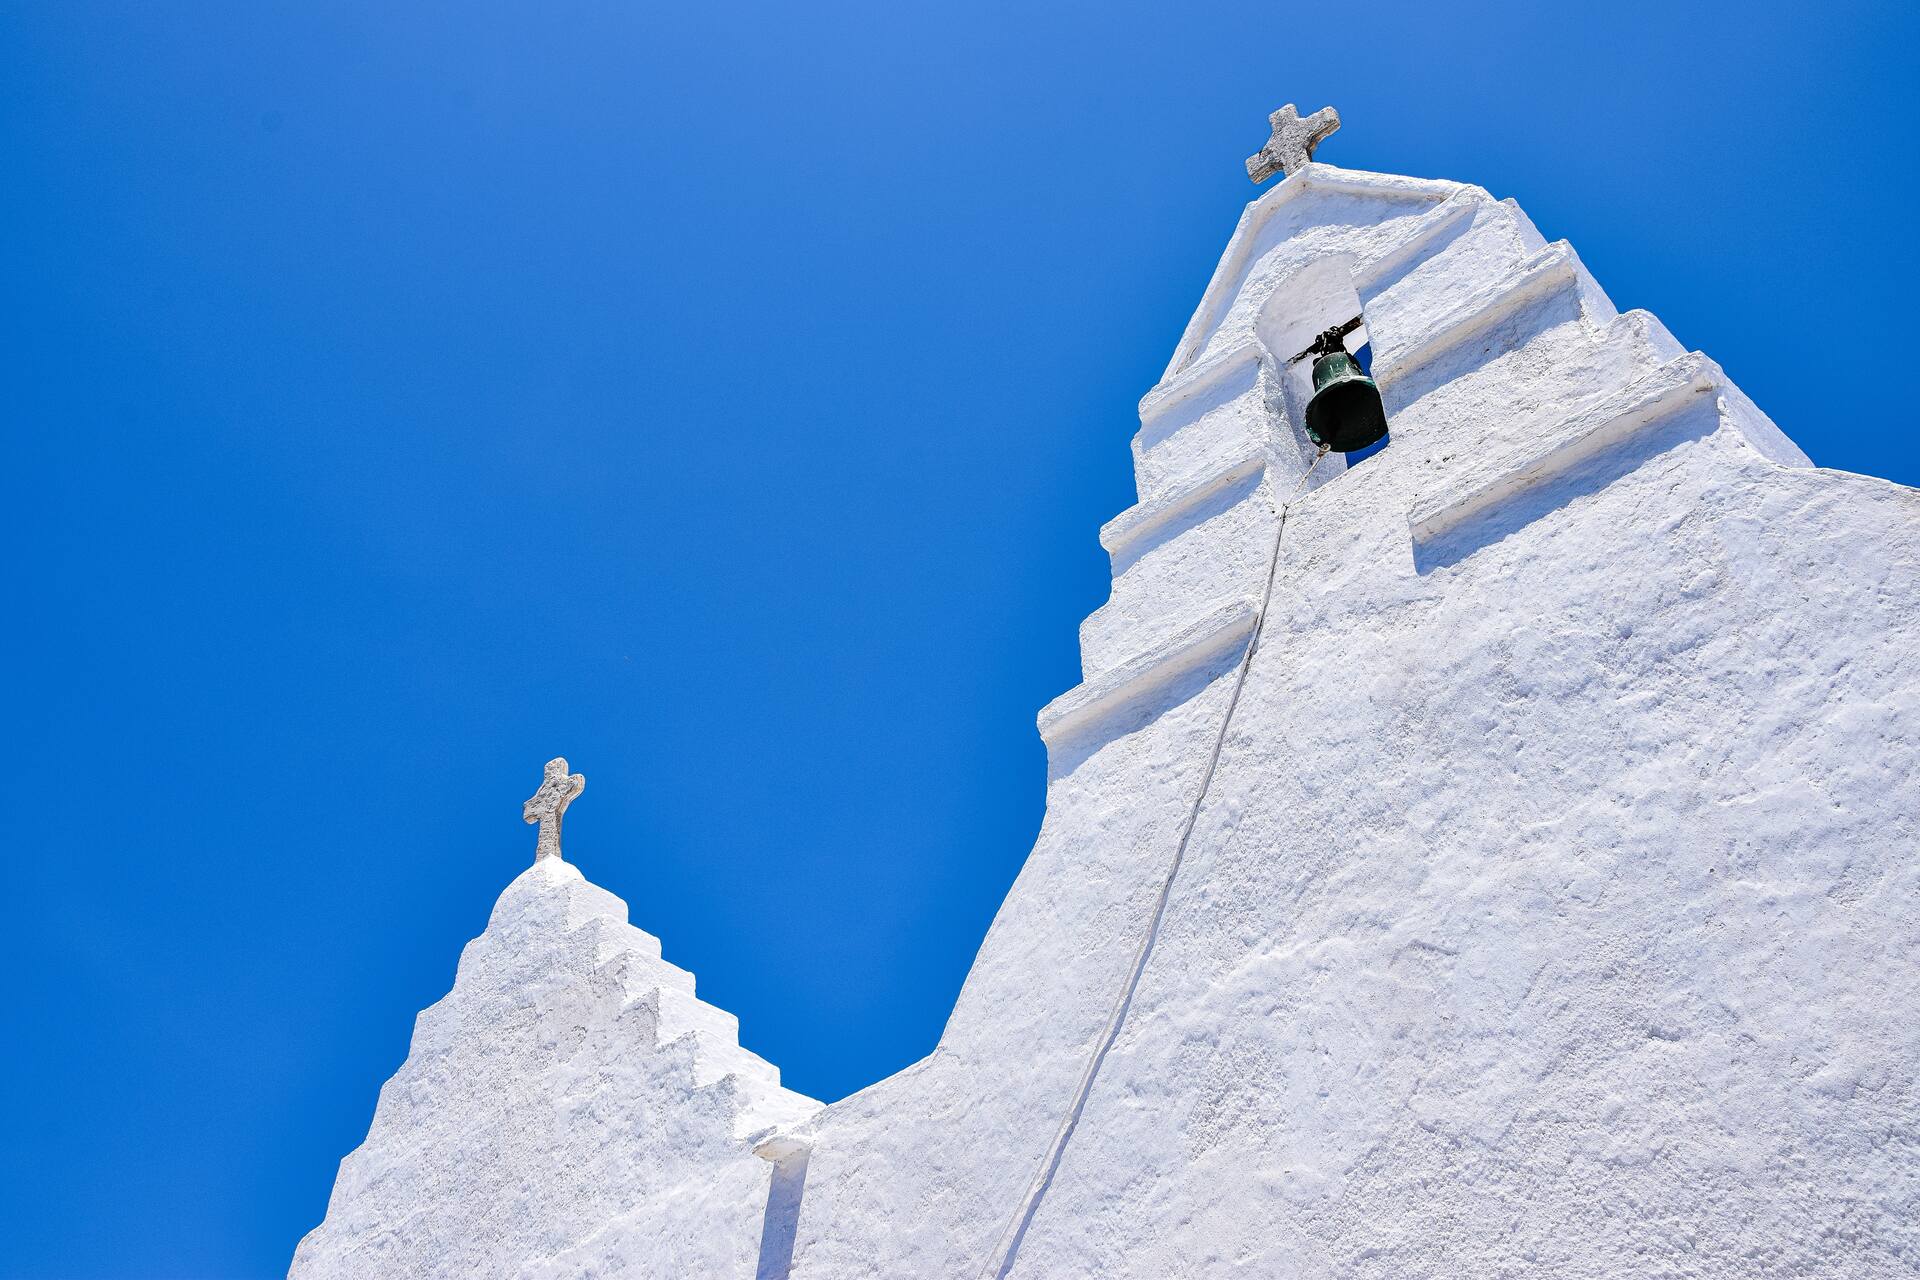 Church in Mykonos